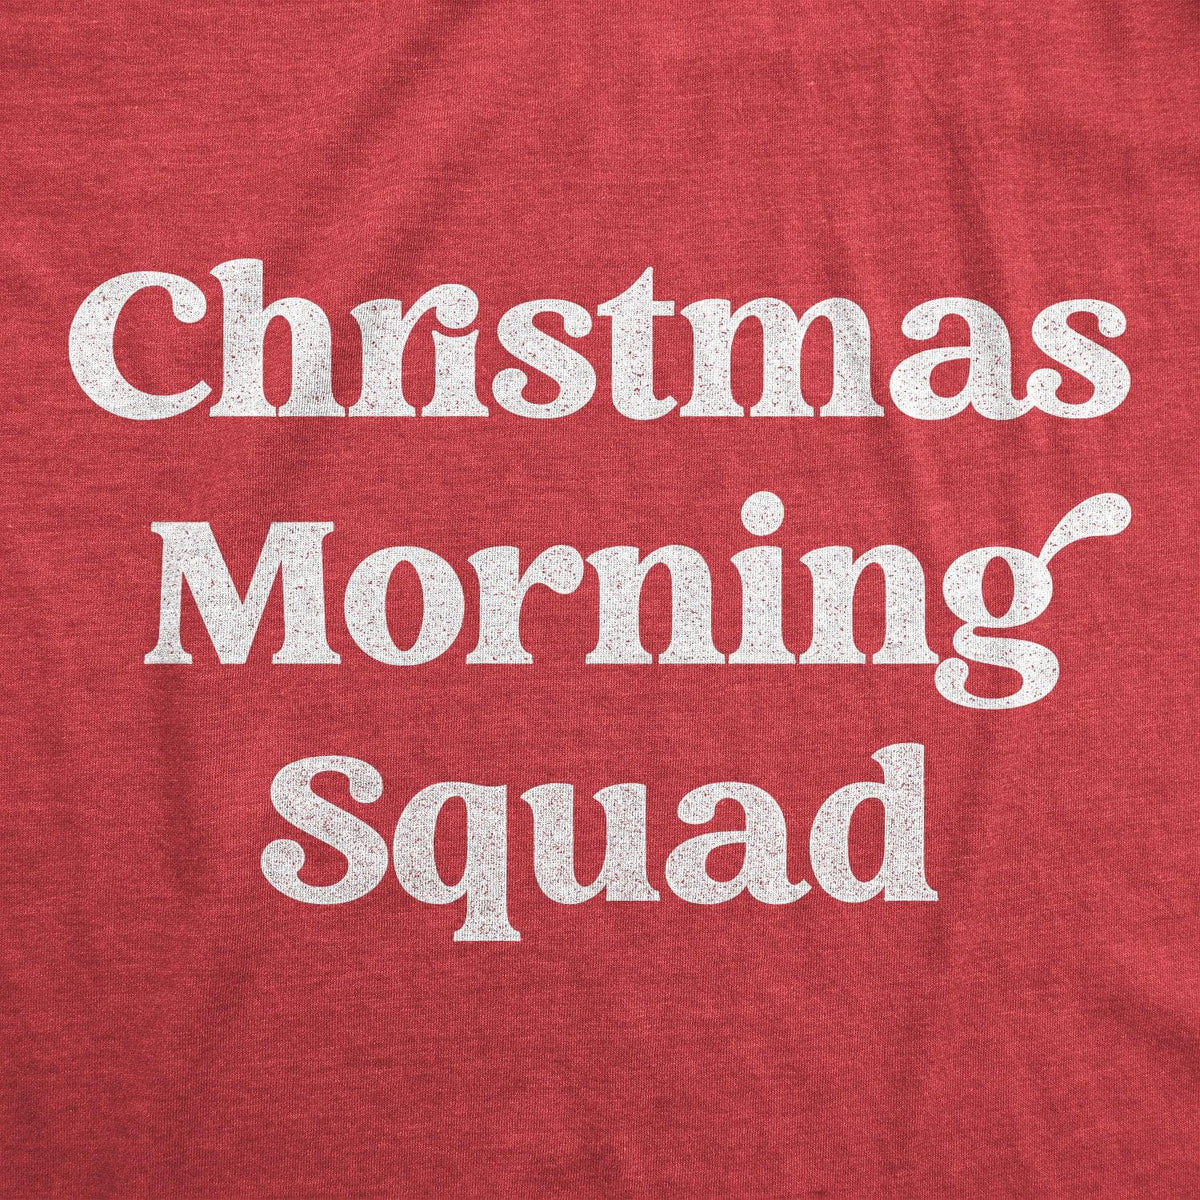 Christmas Morning Squad Women&#39;s Tshirt  -  Crazy Dog T-Shirts